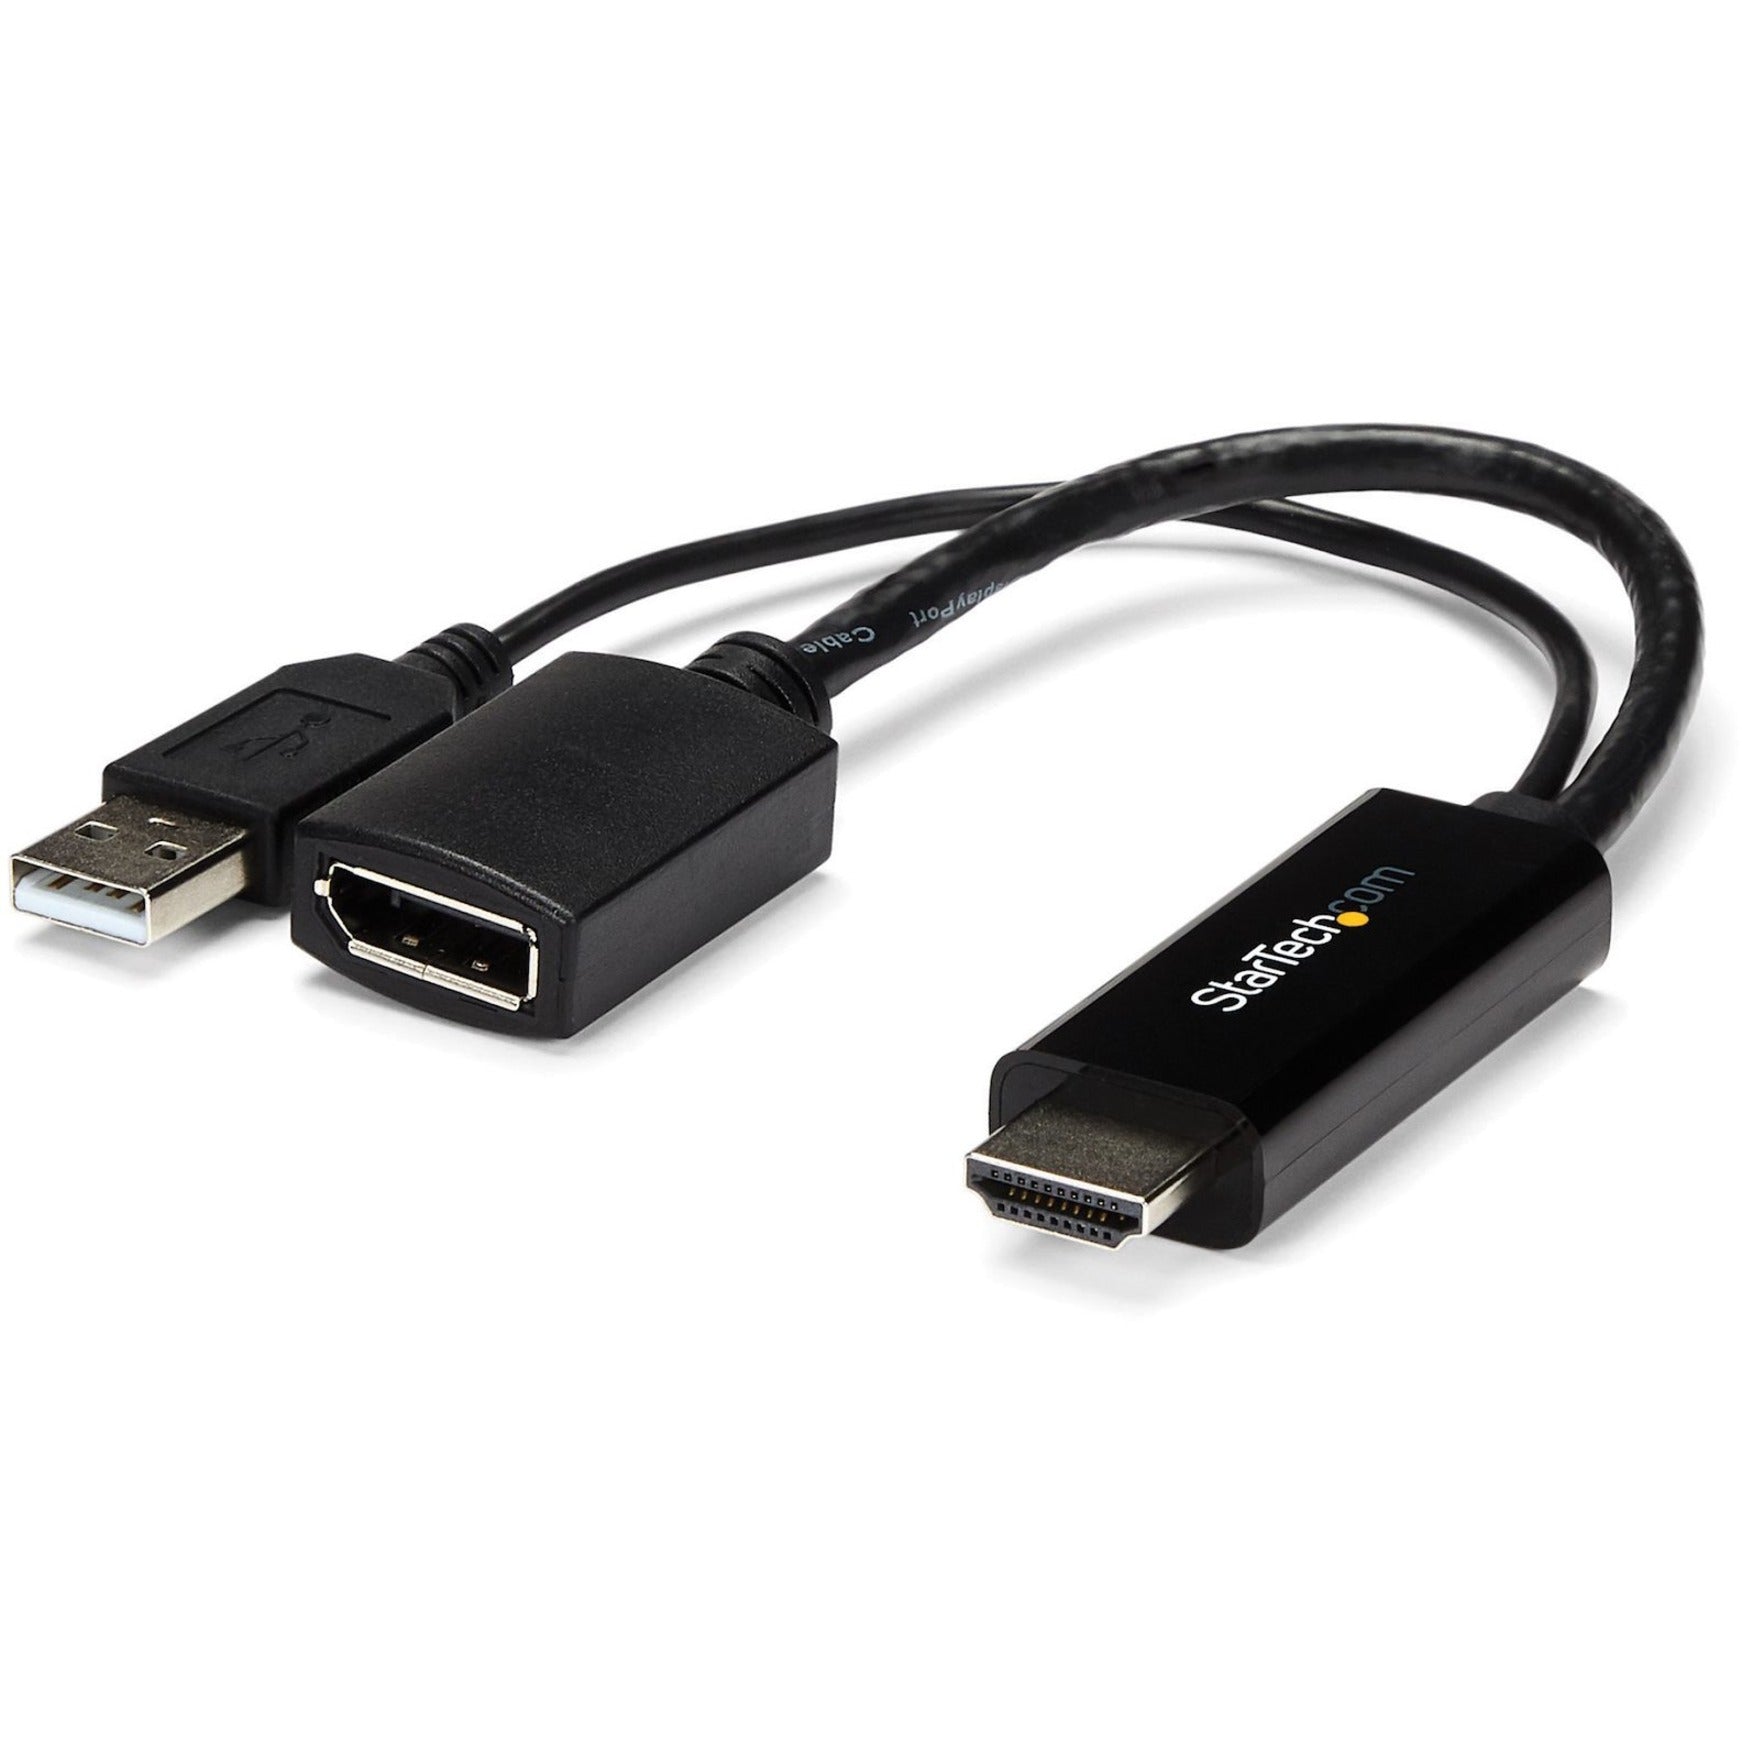 StarTech.com HD2DP HDMI vers DisplayPort Convertisseur- HDMI vers adaptateur DP avec alimentation USB - 4K Facile Plug-and-Play Adaptateur vidéo